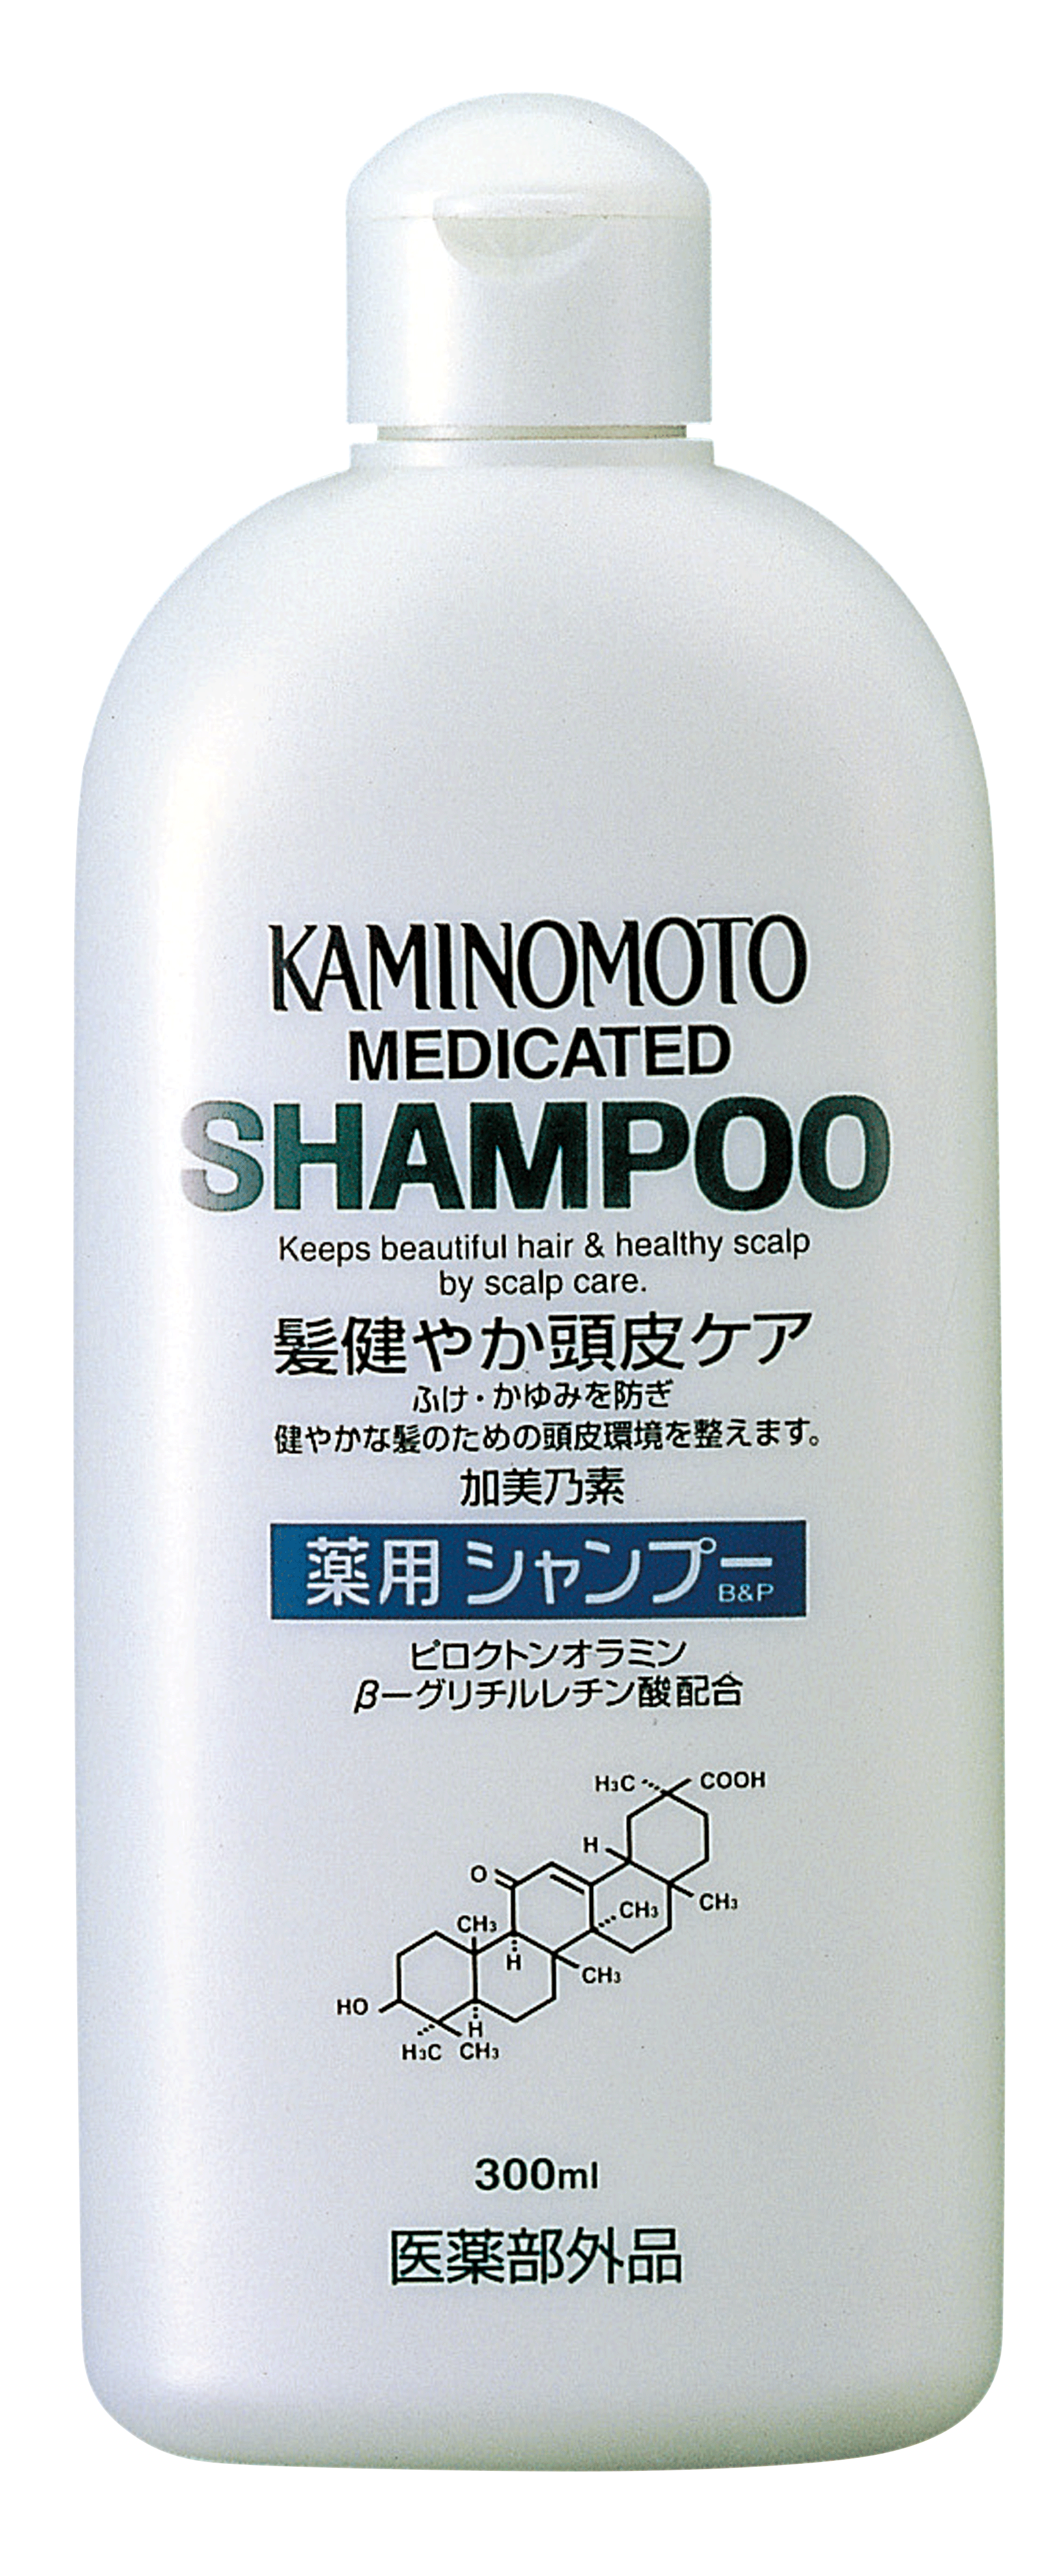 szampon kaminomoto